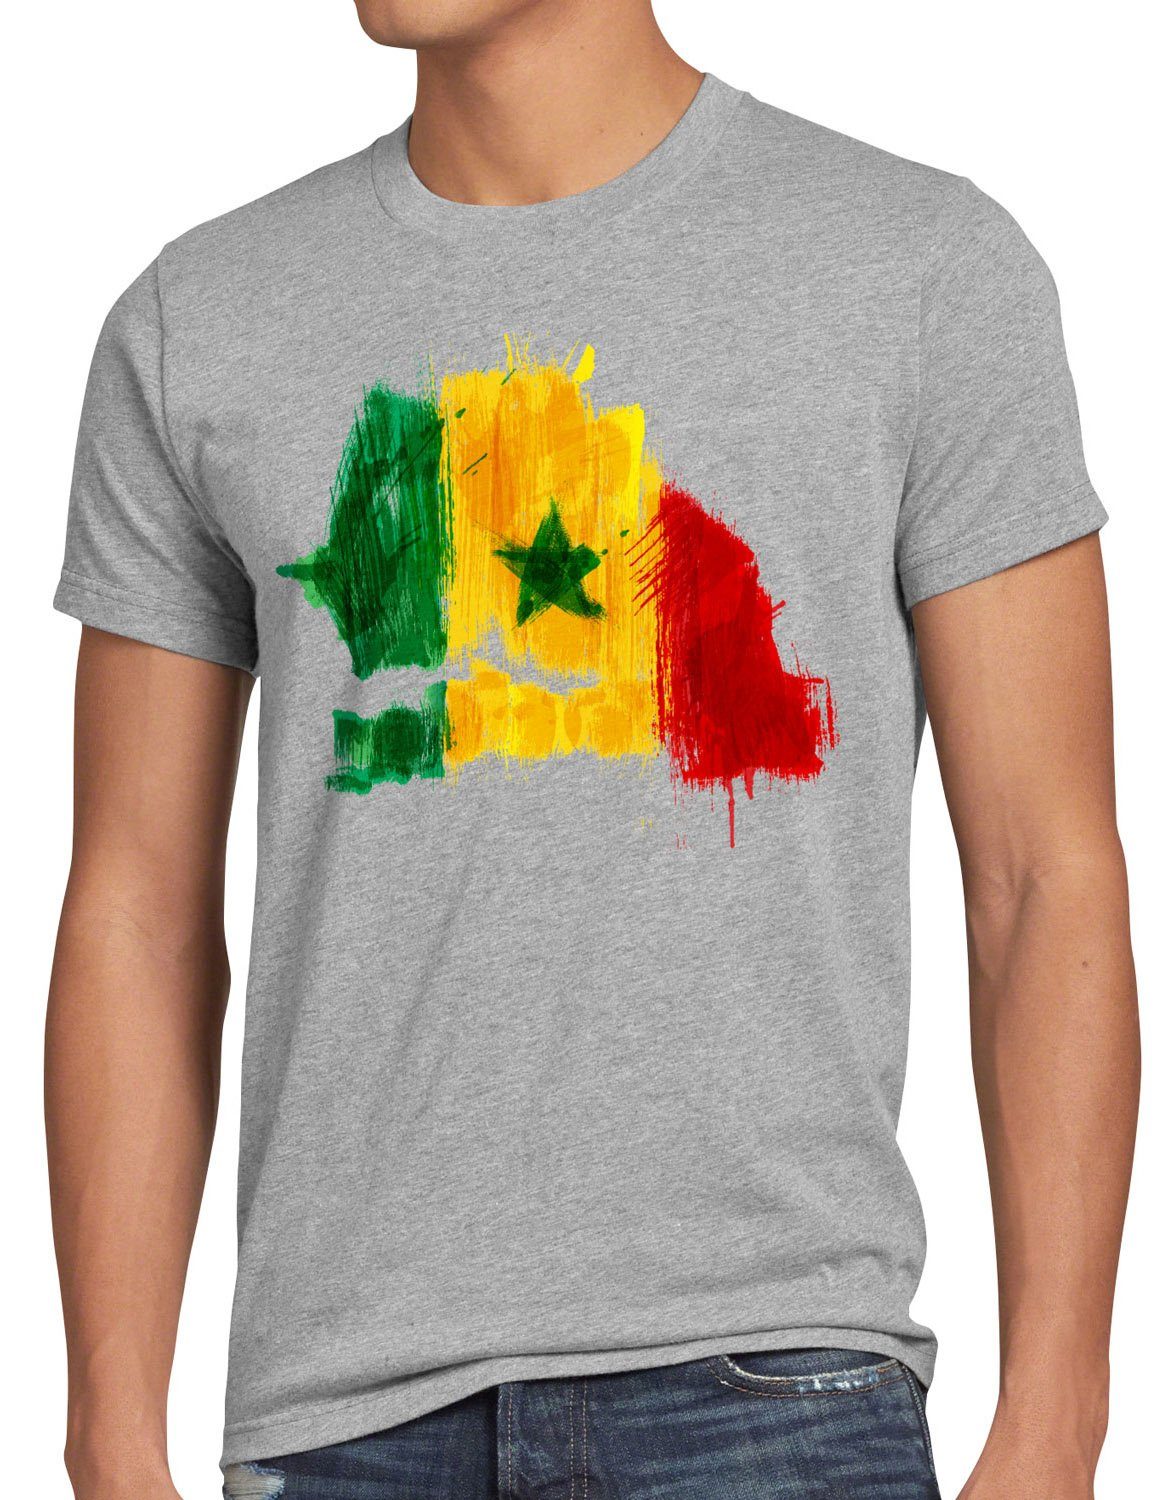 Print-Shirt Sport Senegal Fahne Flagge meliert Herren WM T-Shirt Afrika Fußball grau EM style3